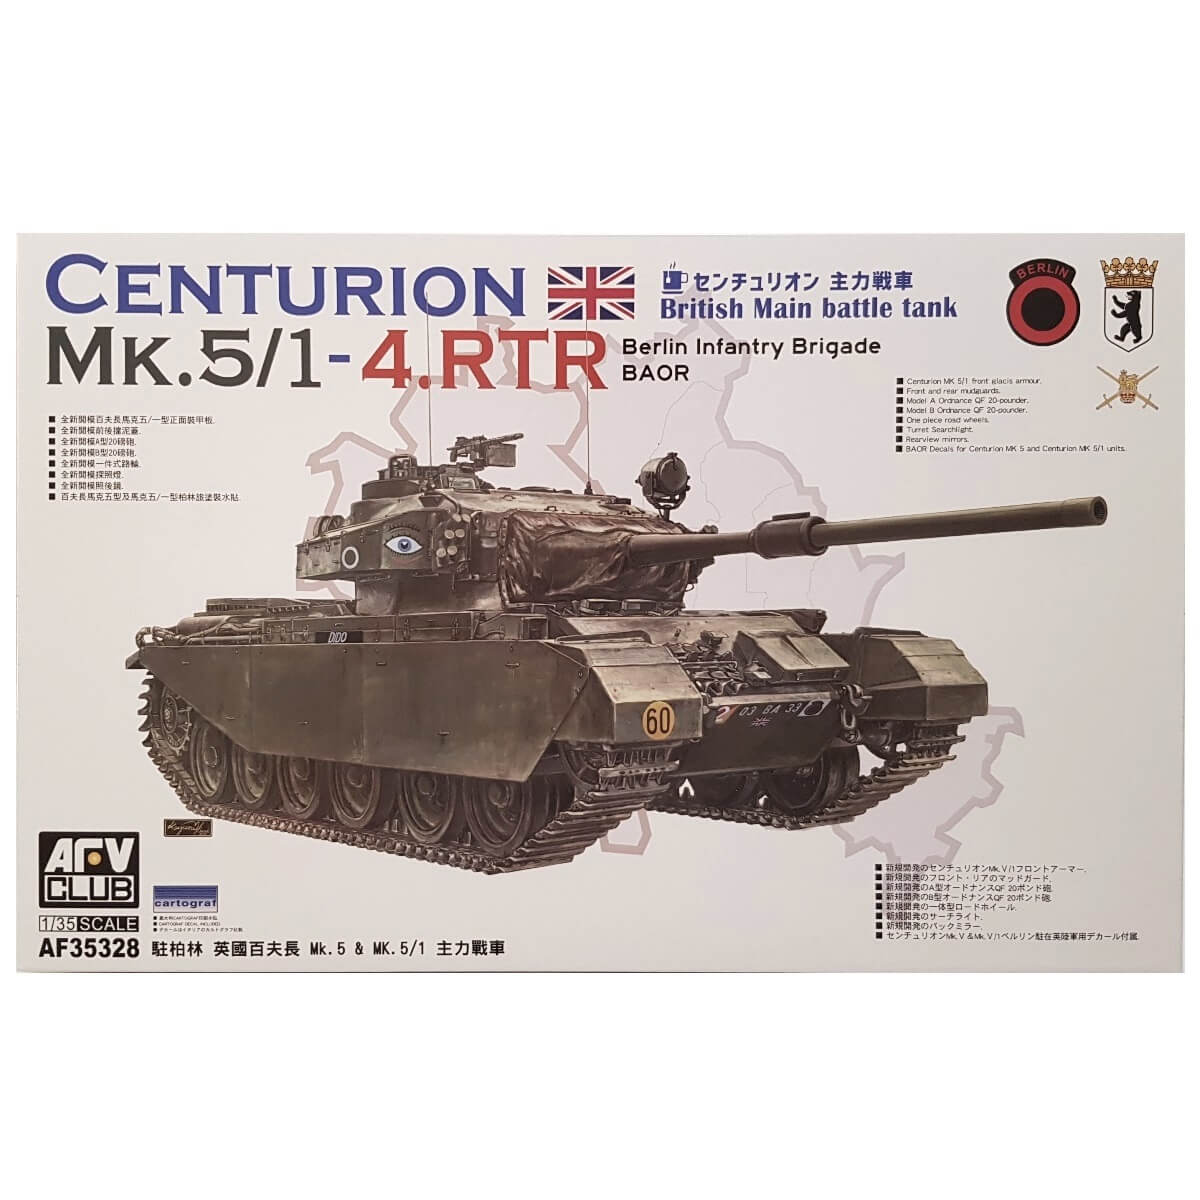 1:35 British MBT Centurion MK.5/1-4.RTR - Berlin Infantry Brigade (BAOR) - AFV CLUB